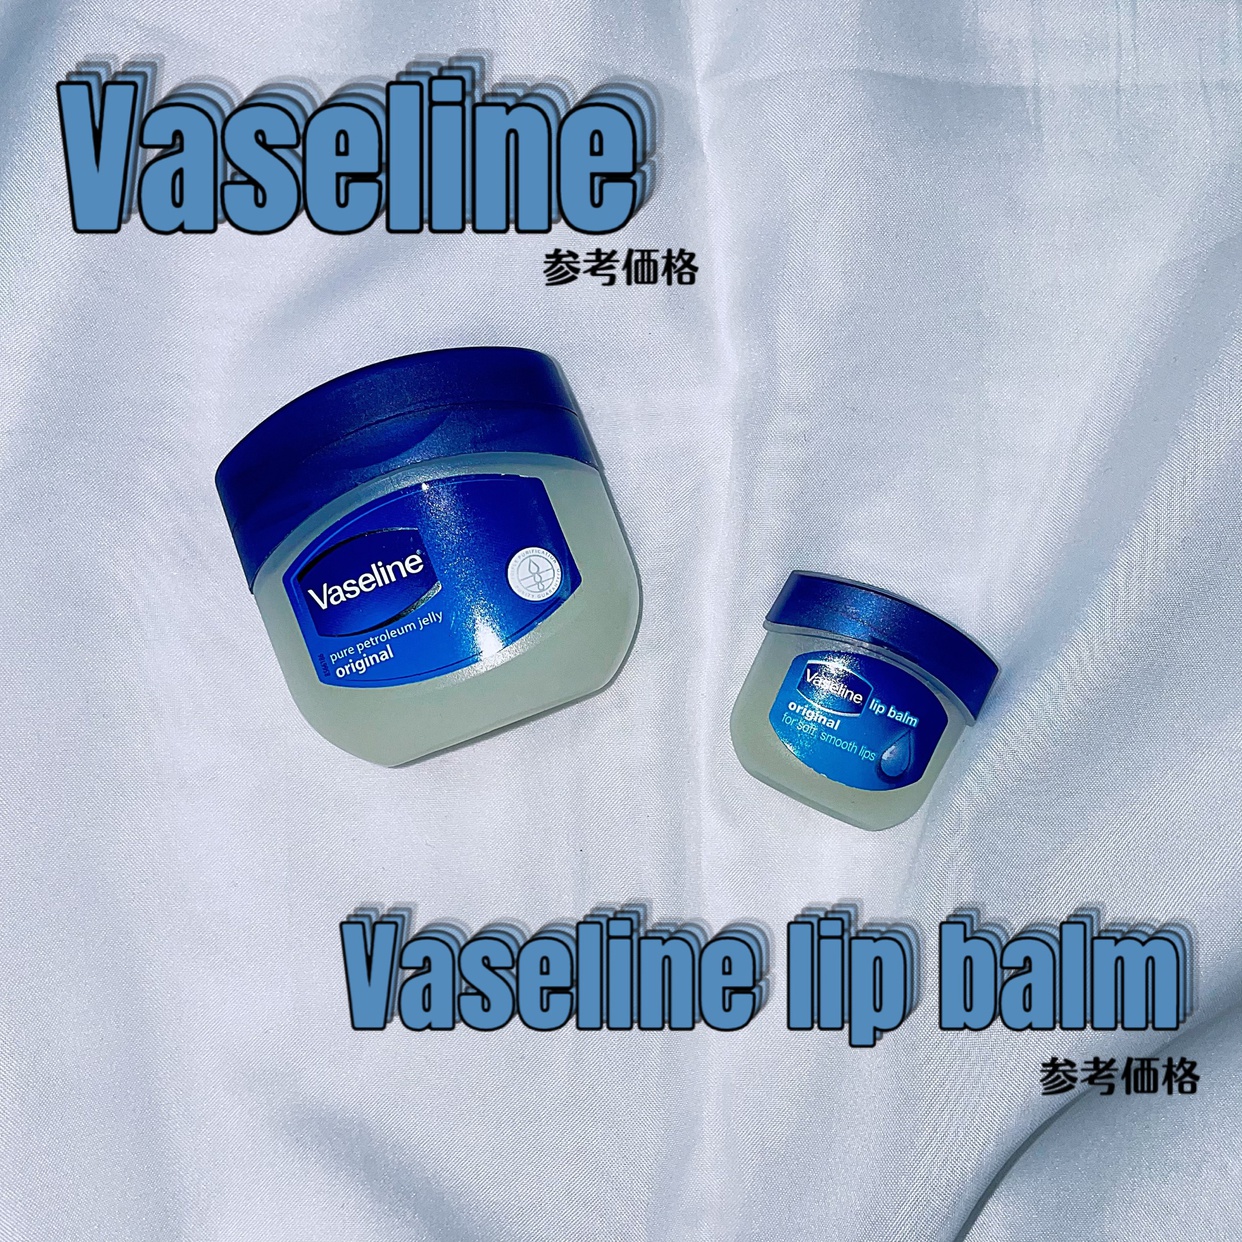 Vaseline(ヴァセリン) リップ オリジナルを使ったmayuさんのクチコミ画像1